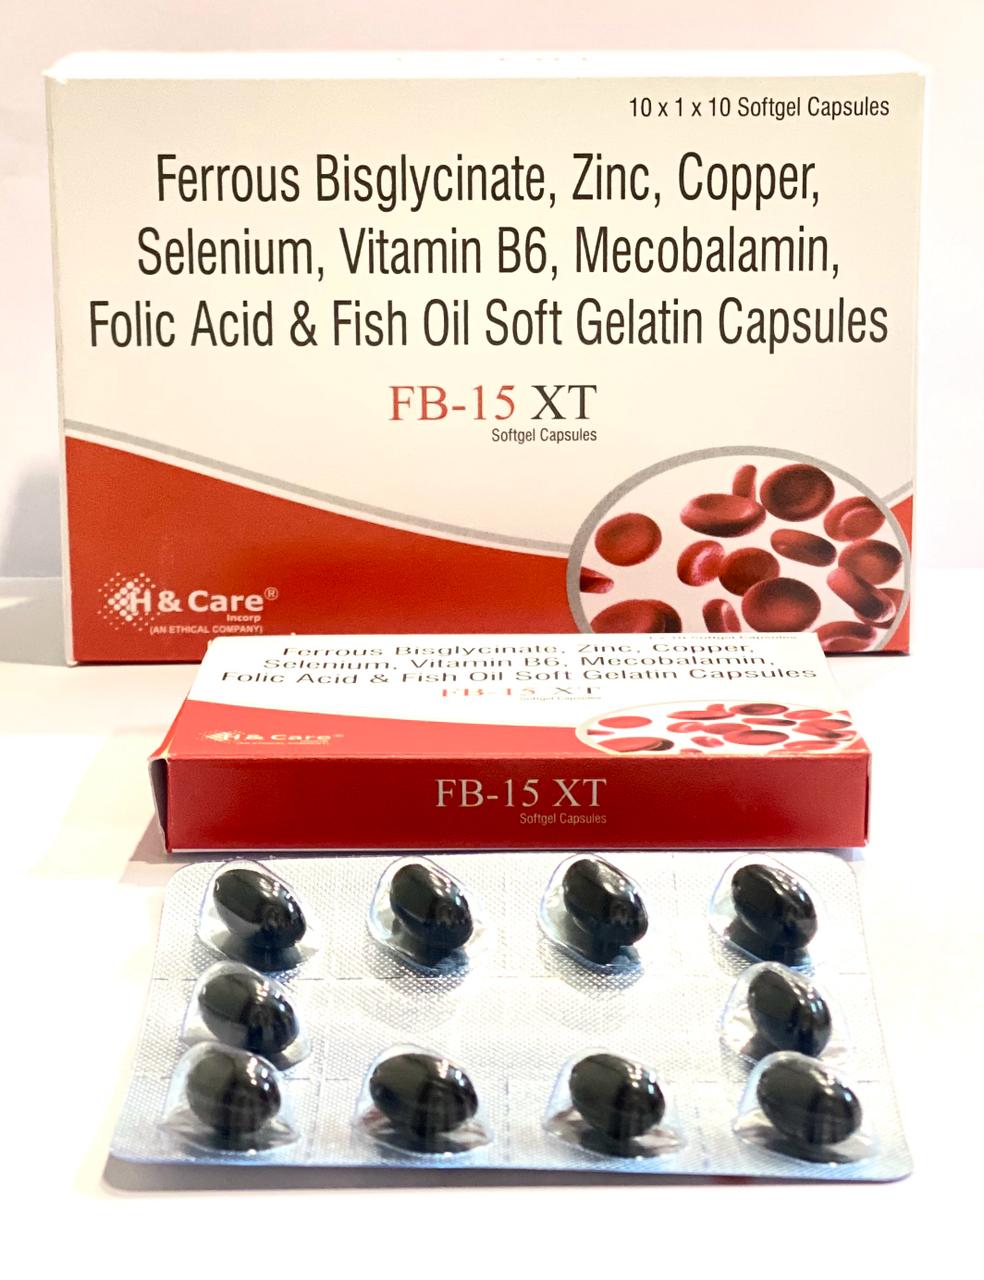 Best multivitamins for women: FB-15 XT: Ferrous Bisglycinate, Zinc, Copper, Selenium, Vitamin B6, Mecobalamin, Folic Acid, Fish oil soft gelatin capsules